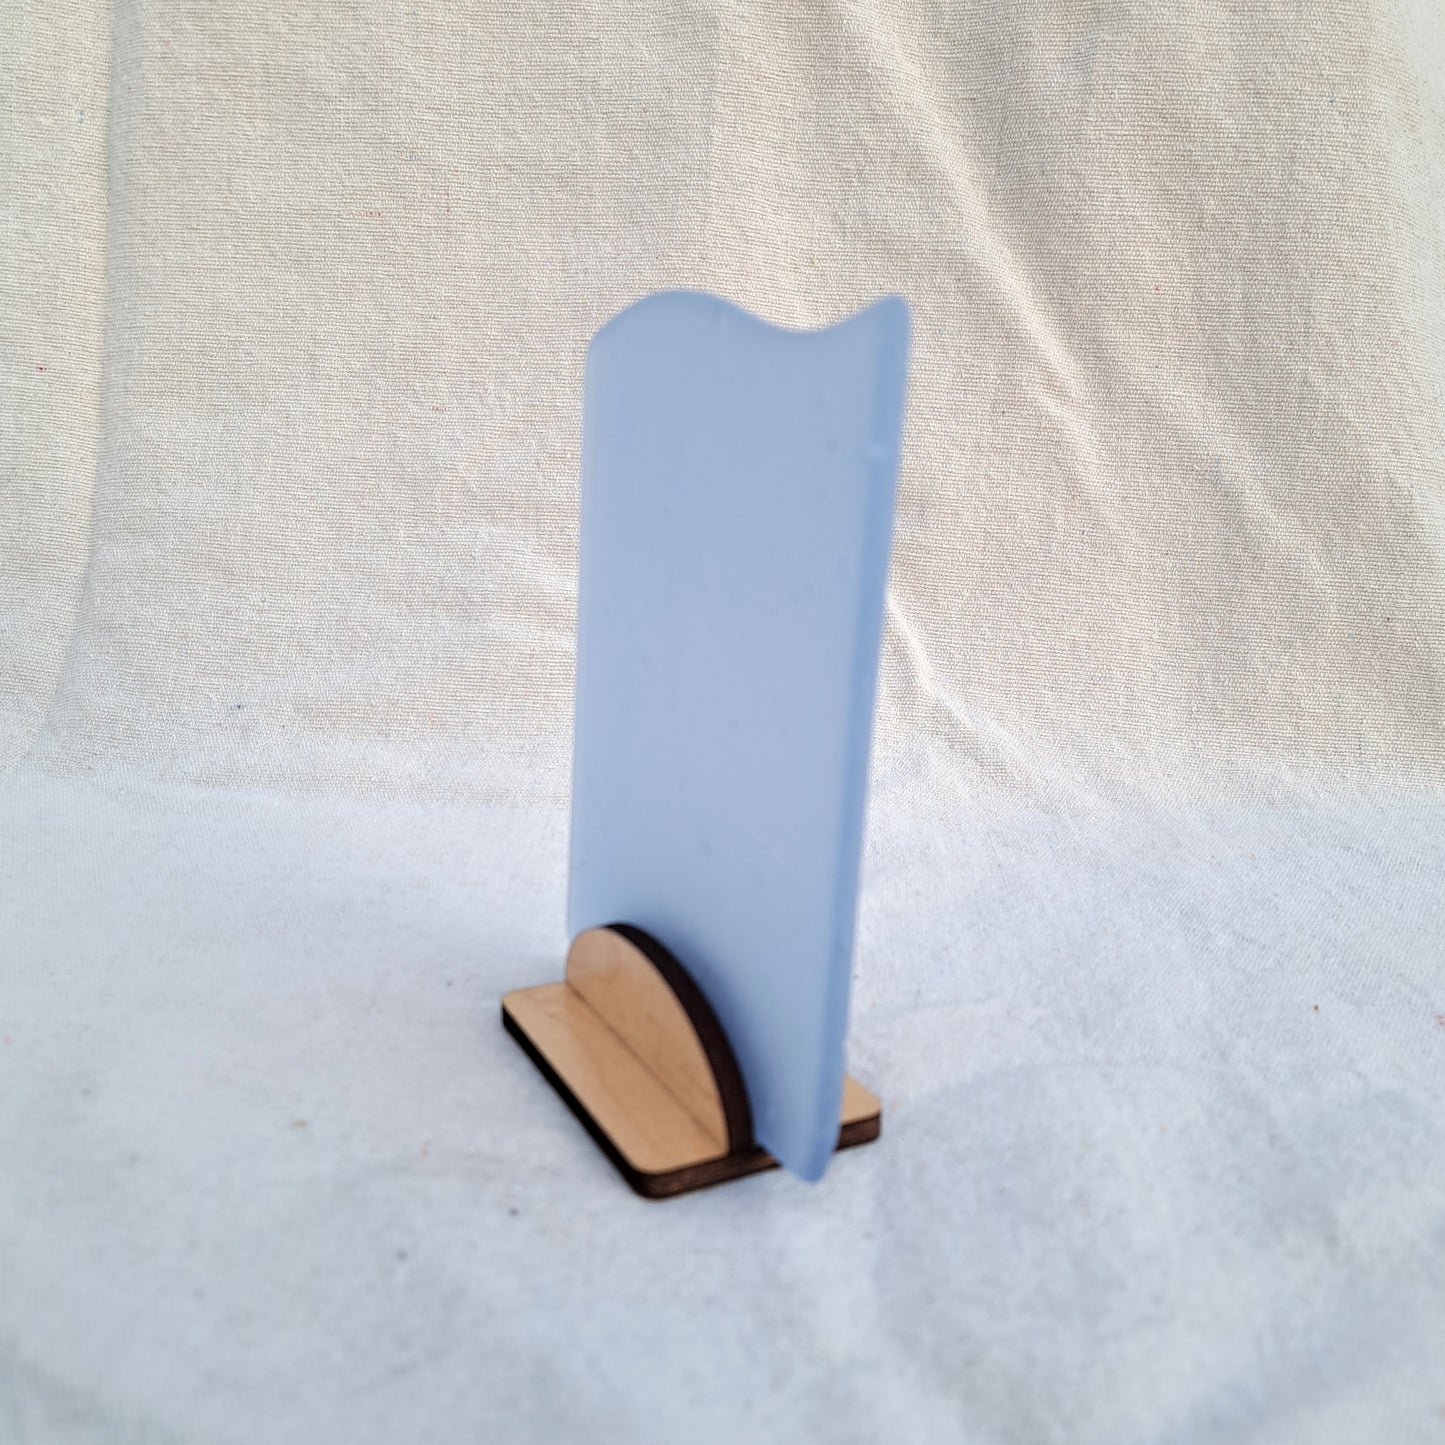 Sky blue sea glass sign blank - 5x4 inch tumble glass piece